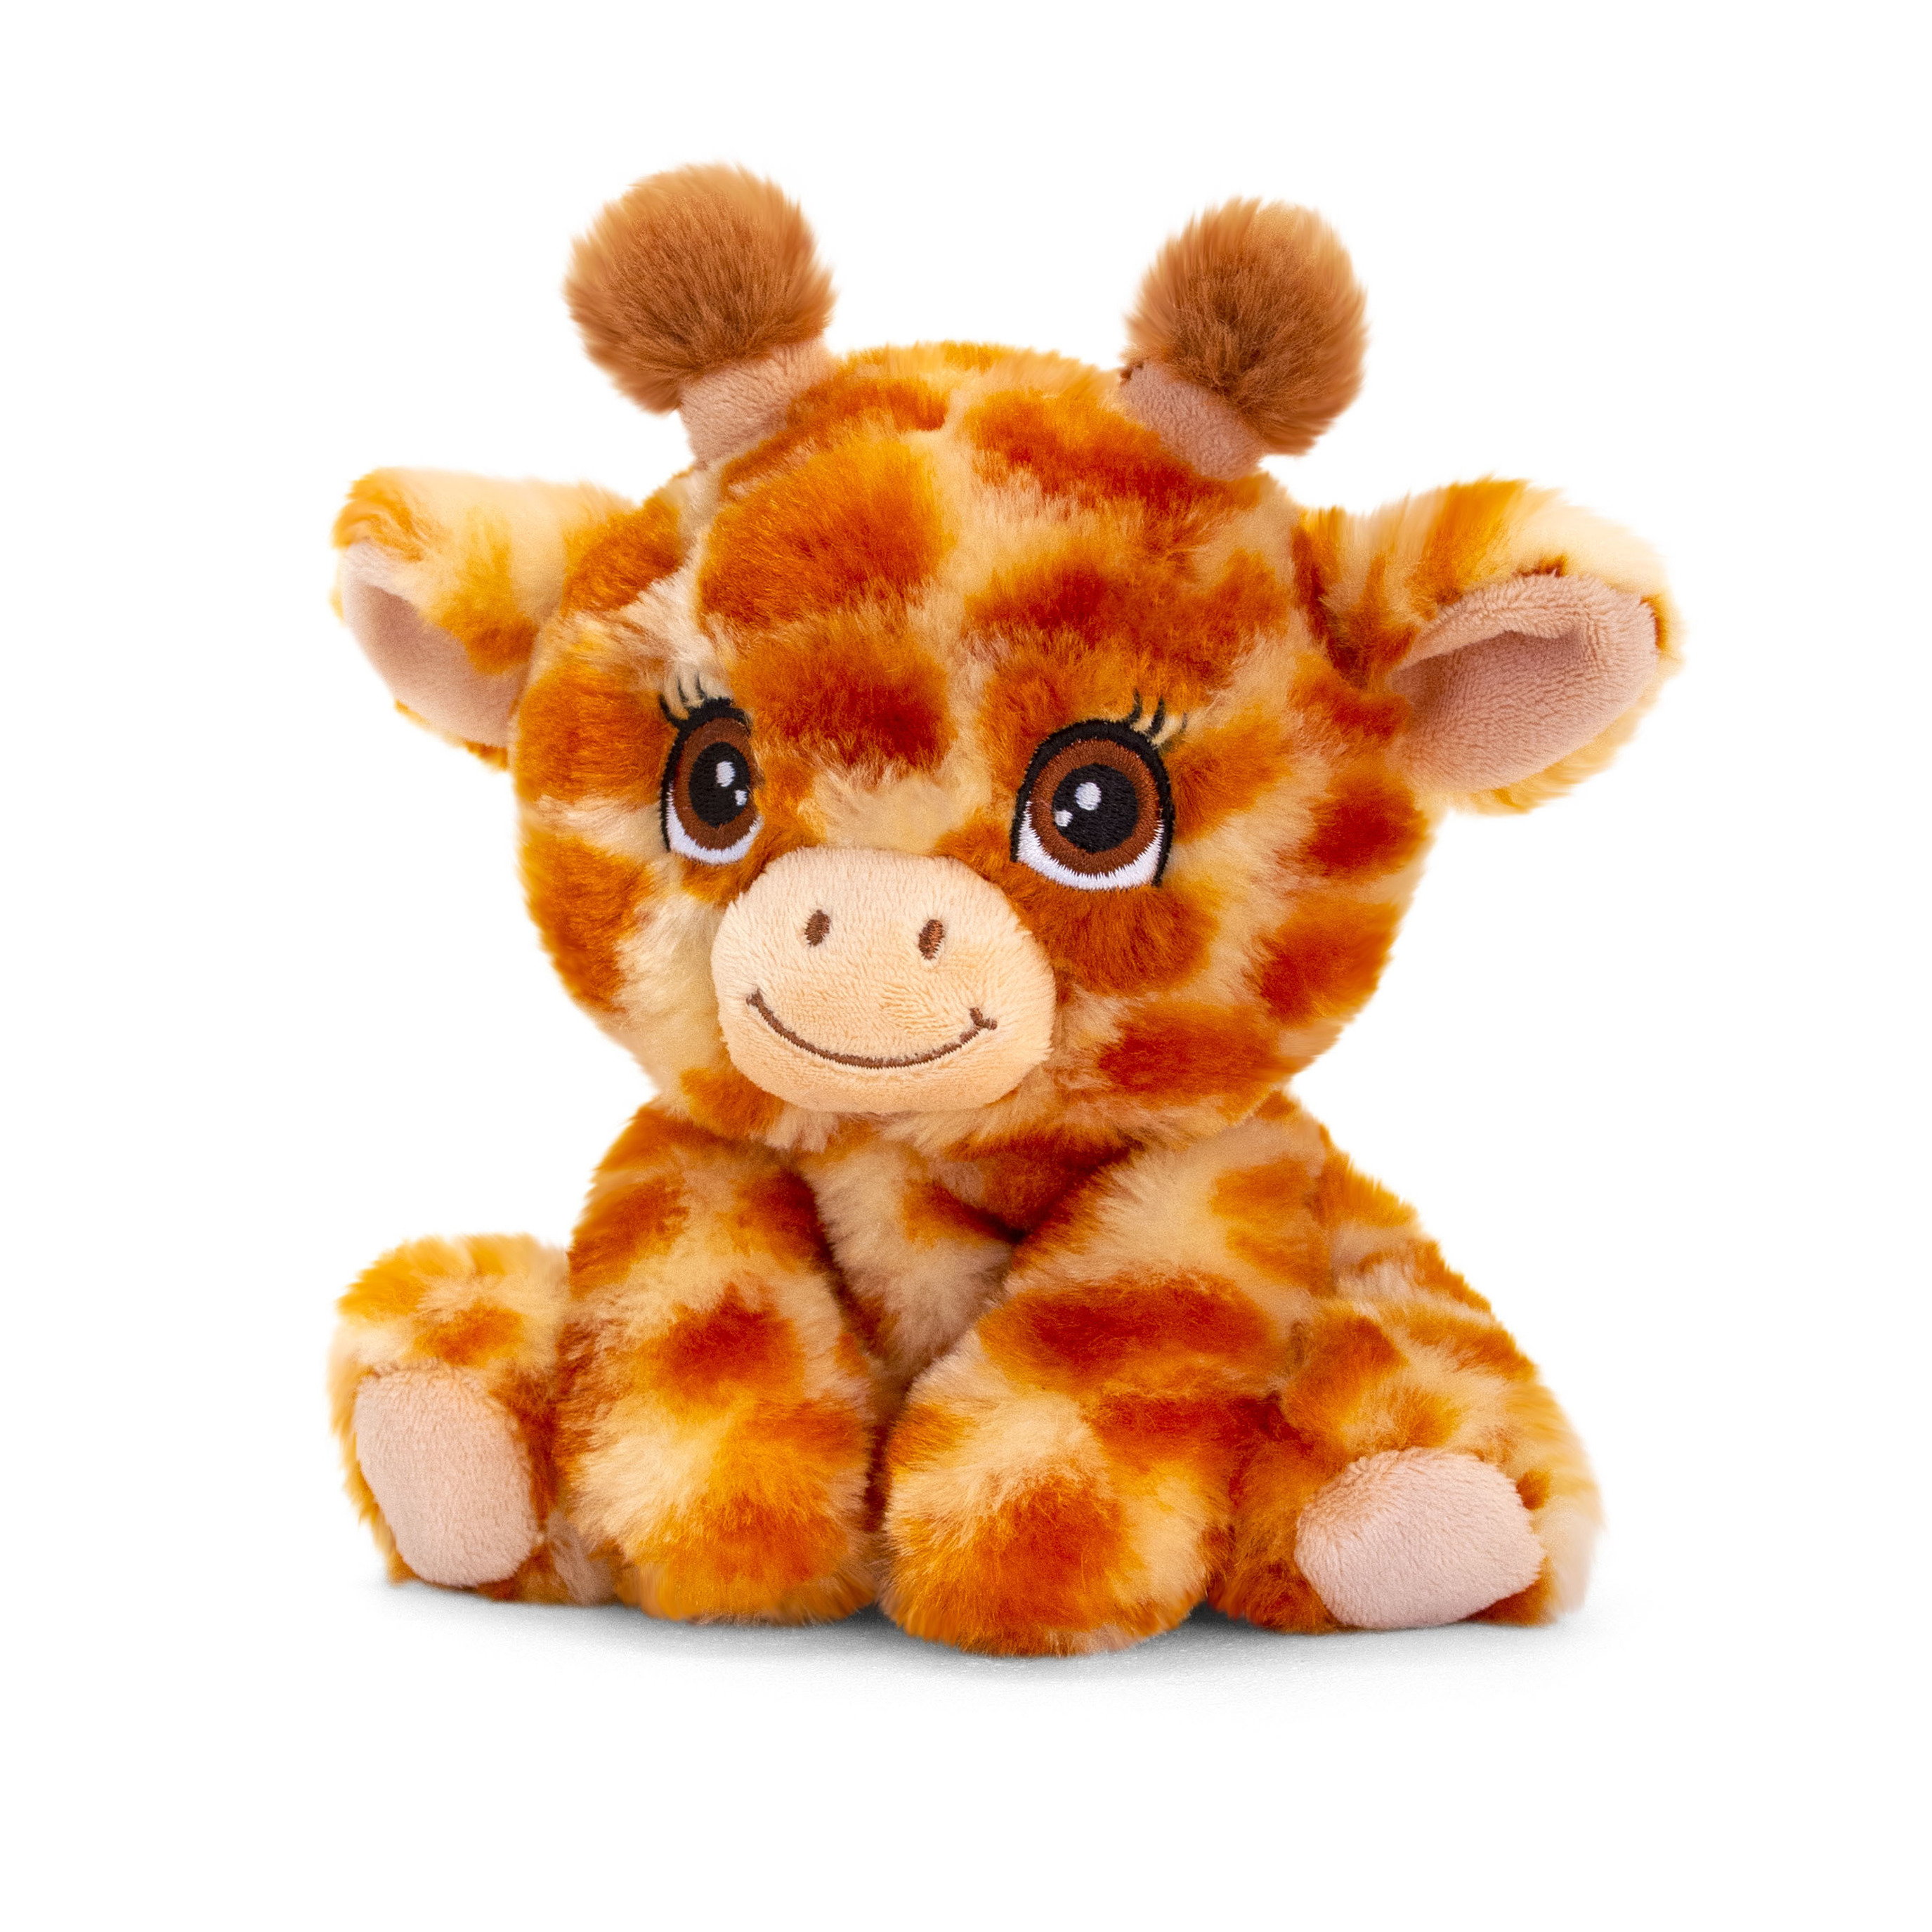 Keel Toys Pluche knuffel dier giraffe super zacht 16 cm